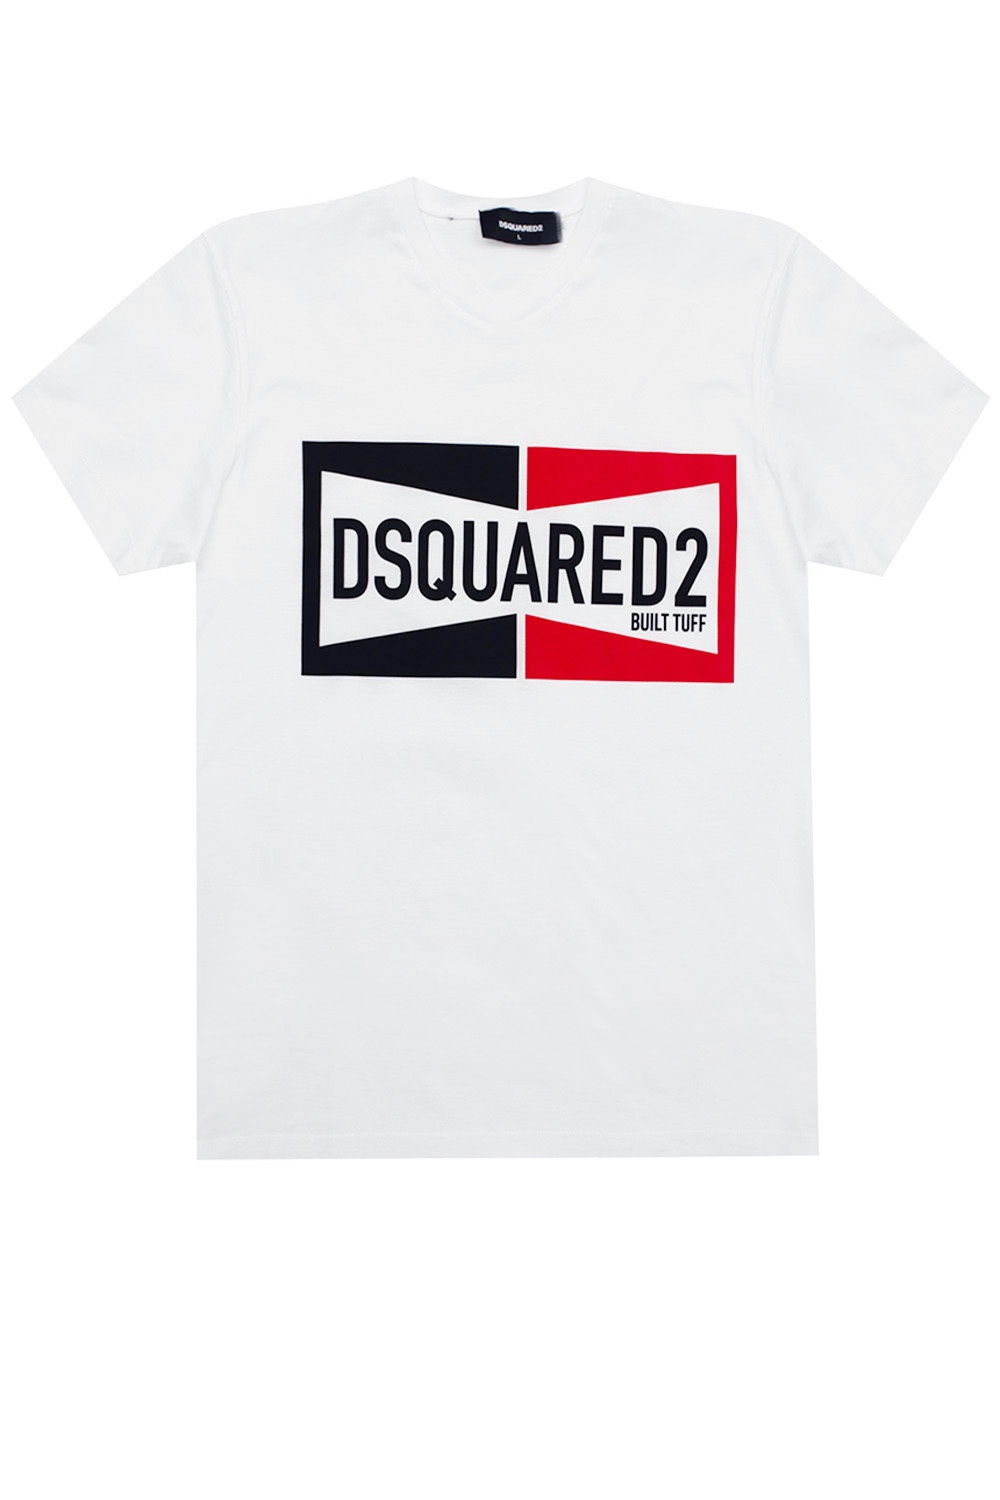 dsquared2 t shirt 2015